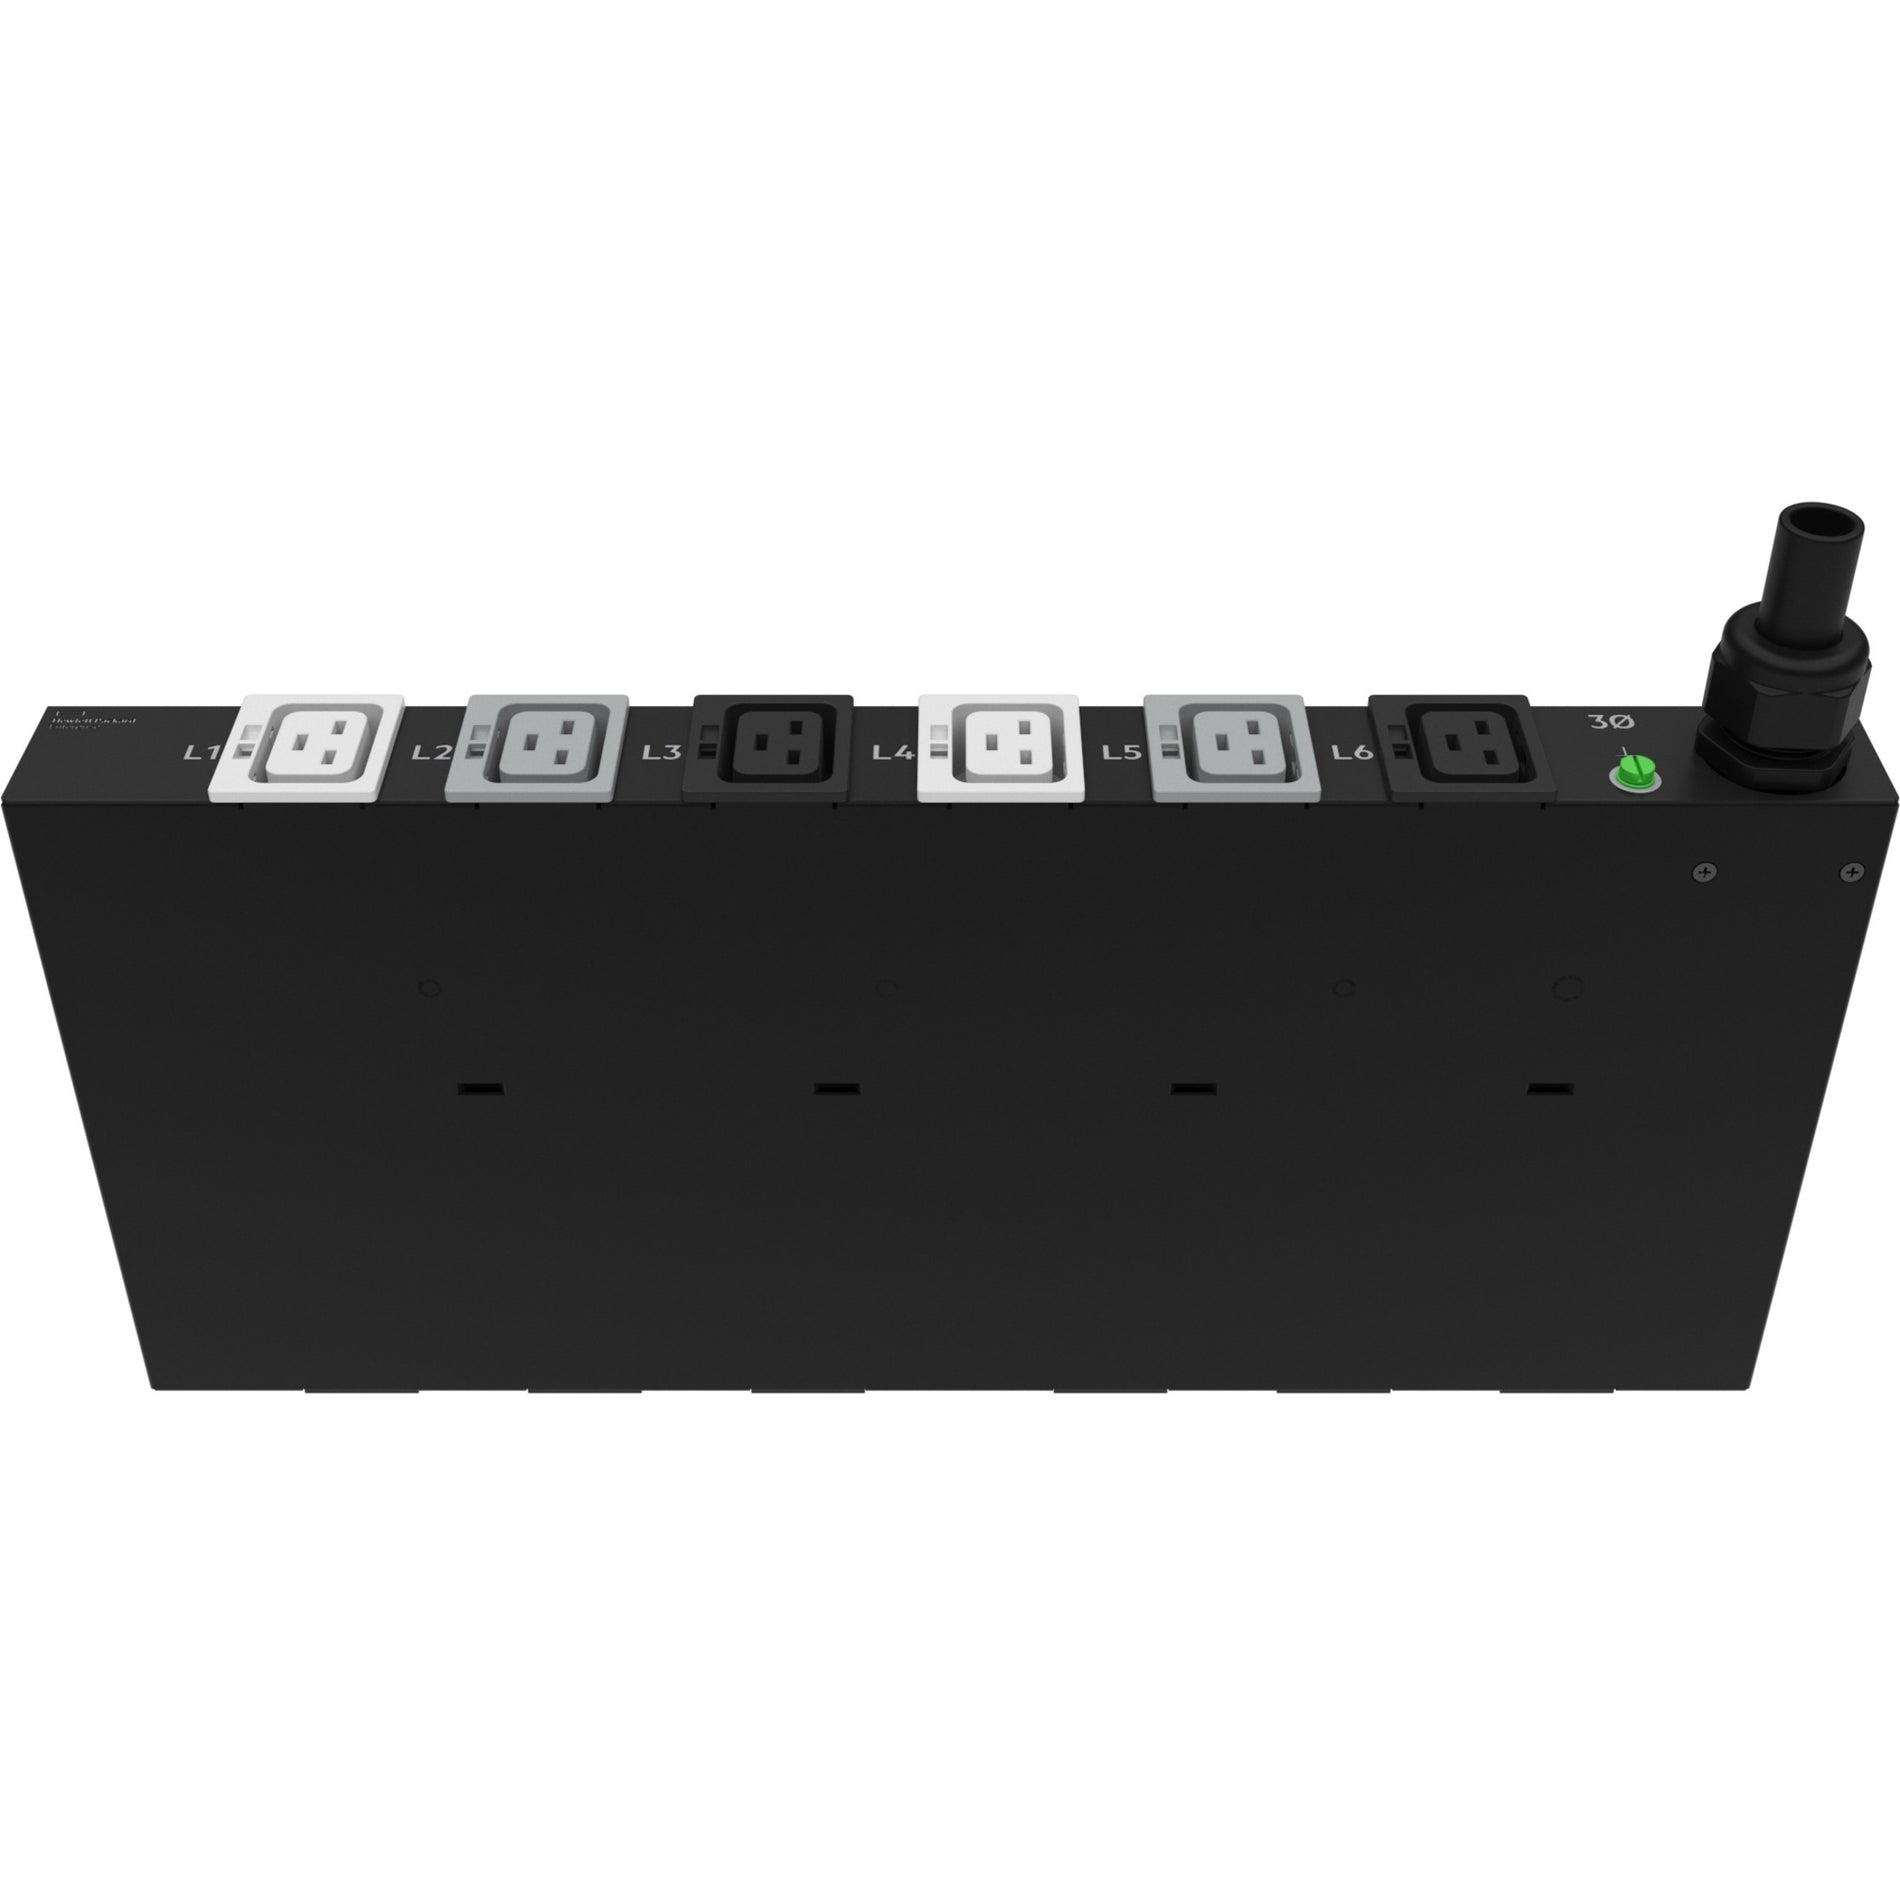 HPE P9Q37A Standard G2 Basic 12-Outlet PDU, 3600 VA Power Rating, 16 A Input Current